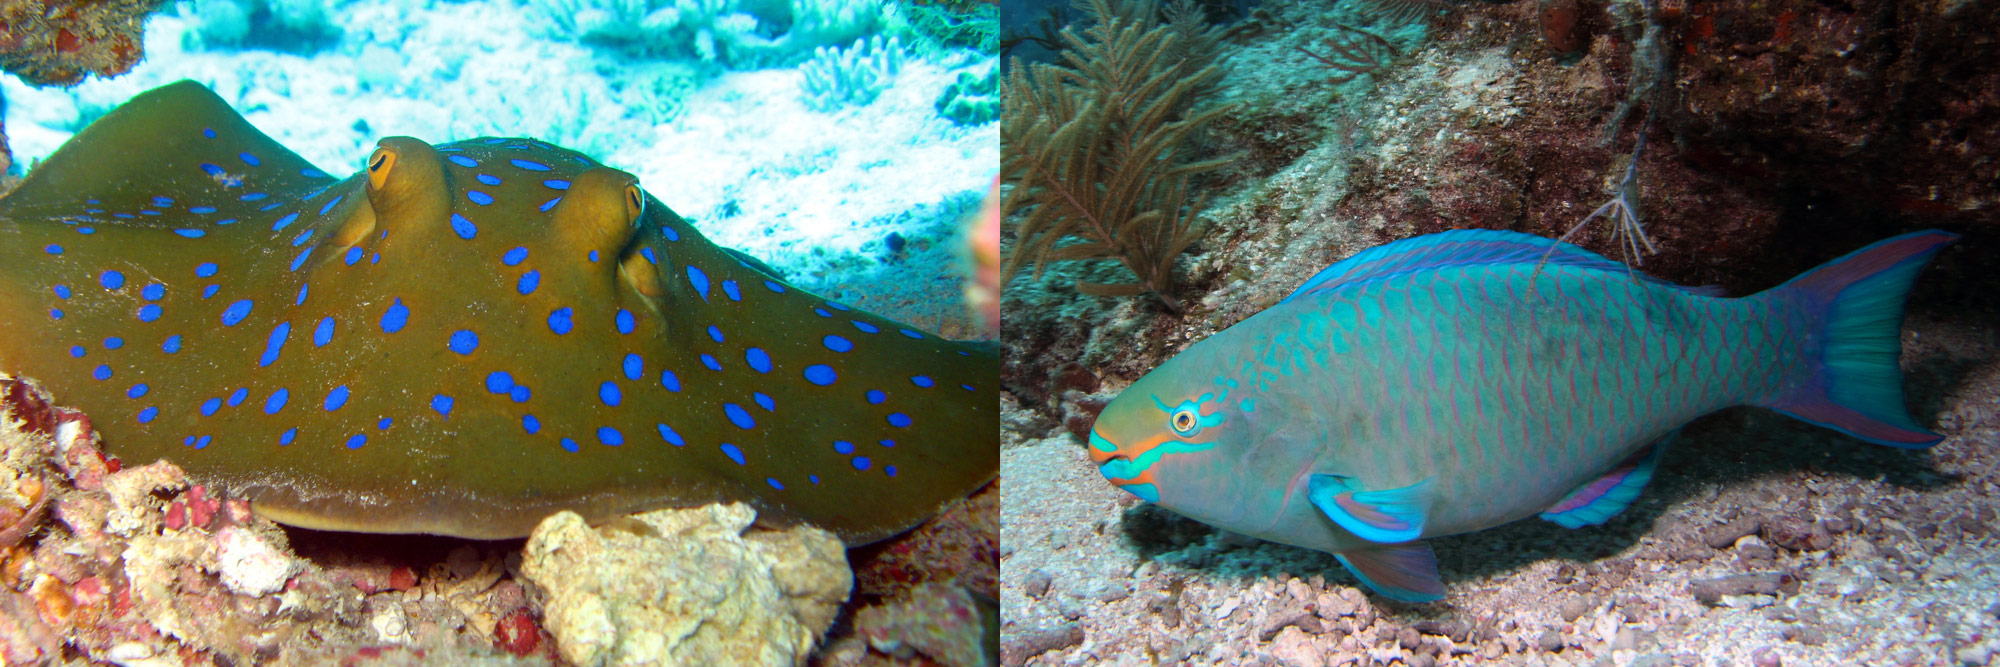 Florida Keys Sting Ray and Parrot Fish